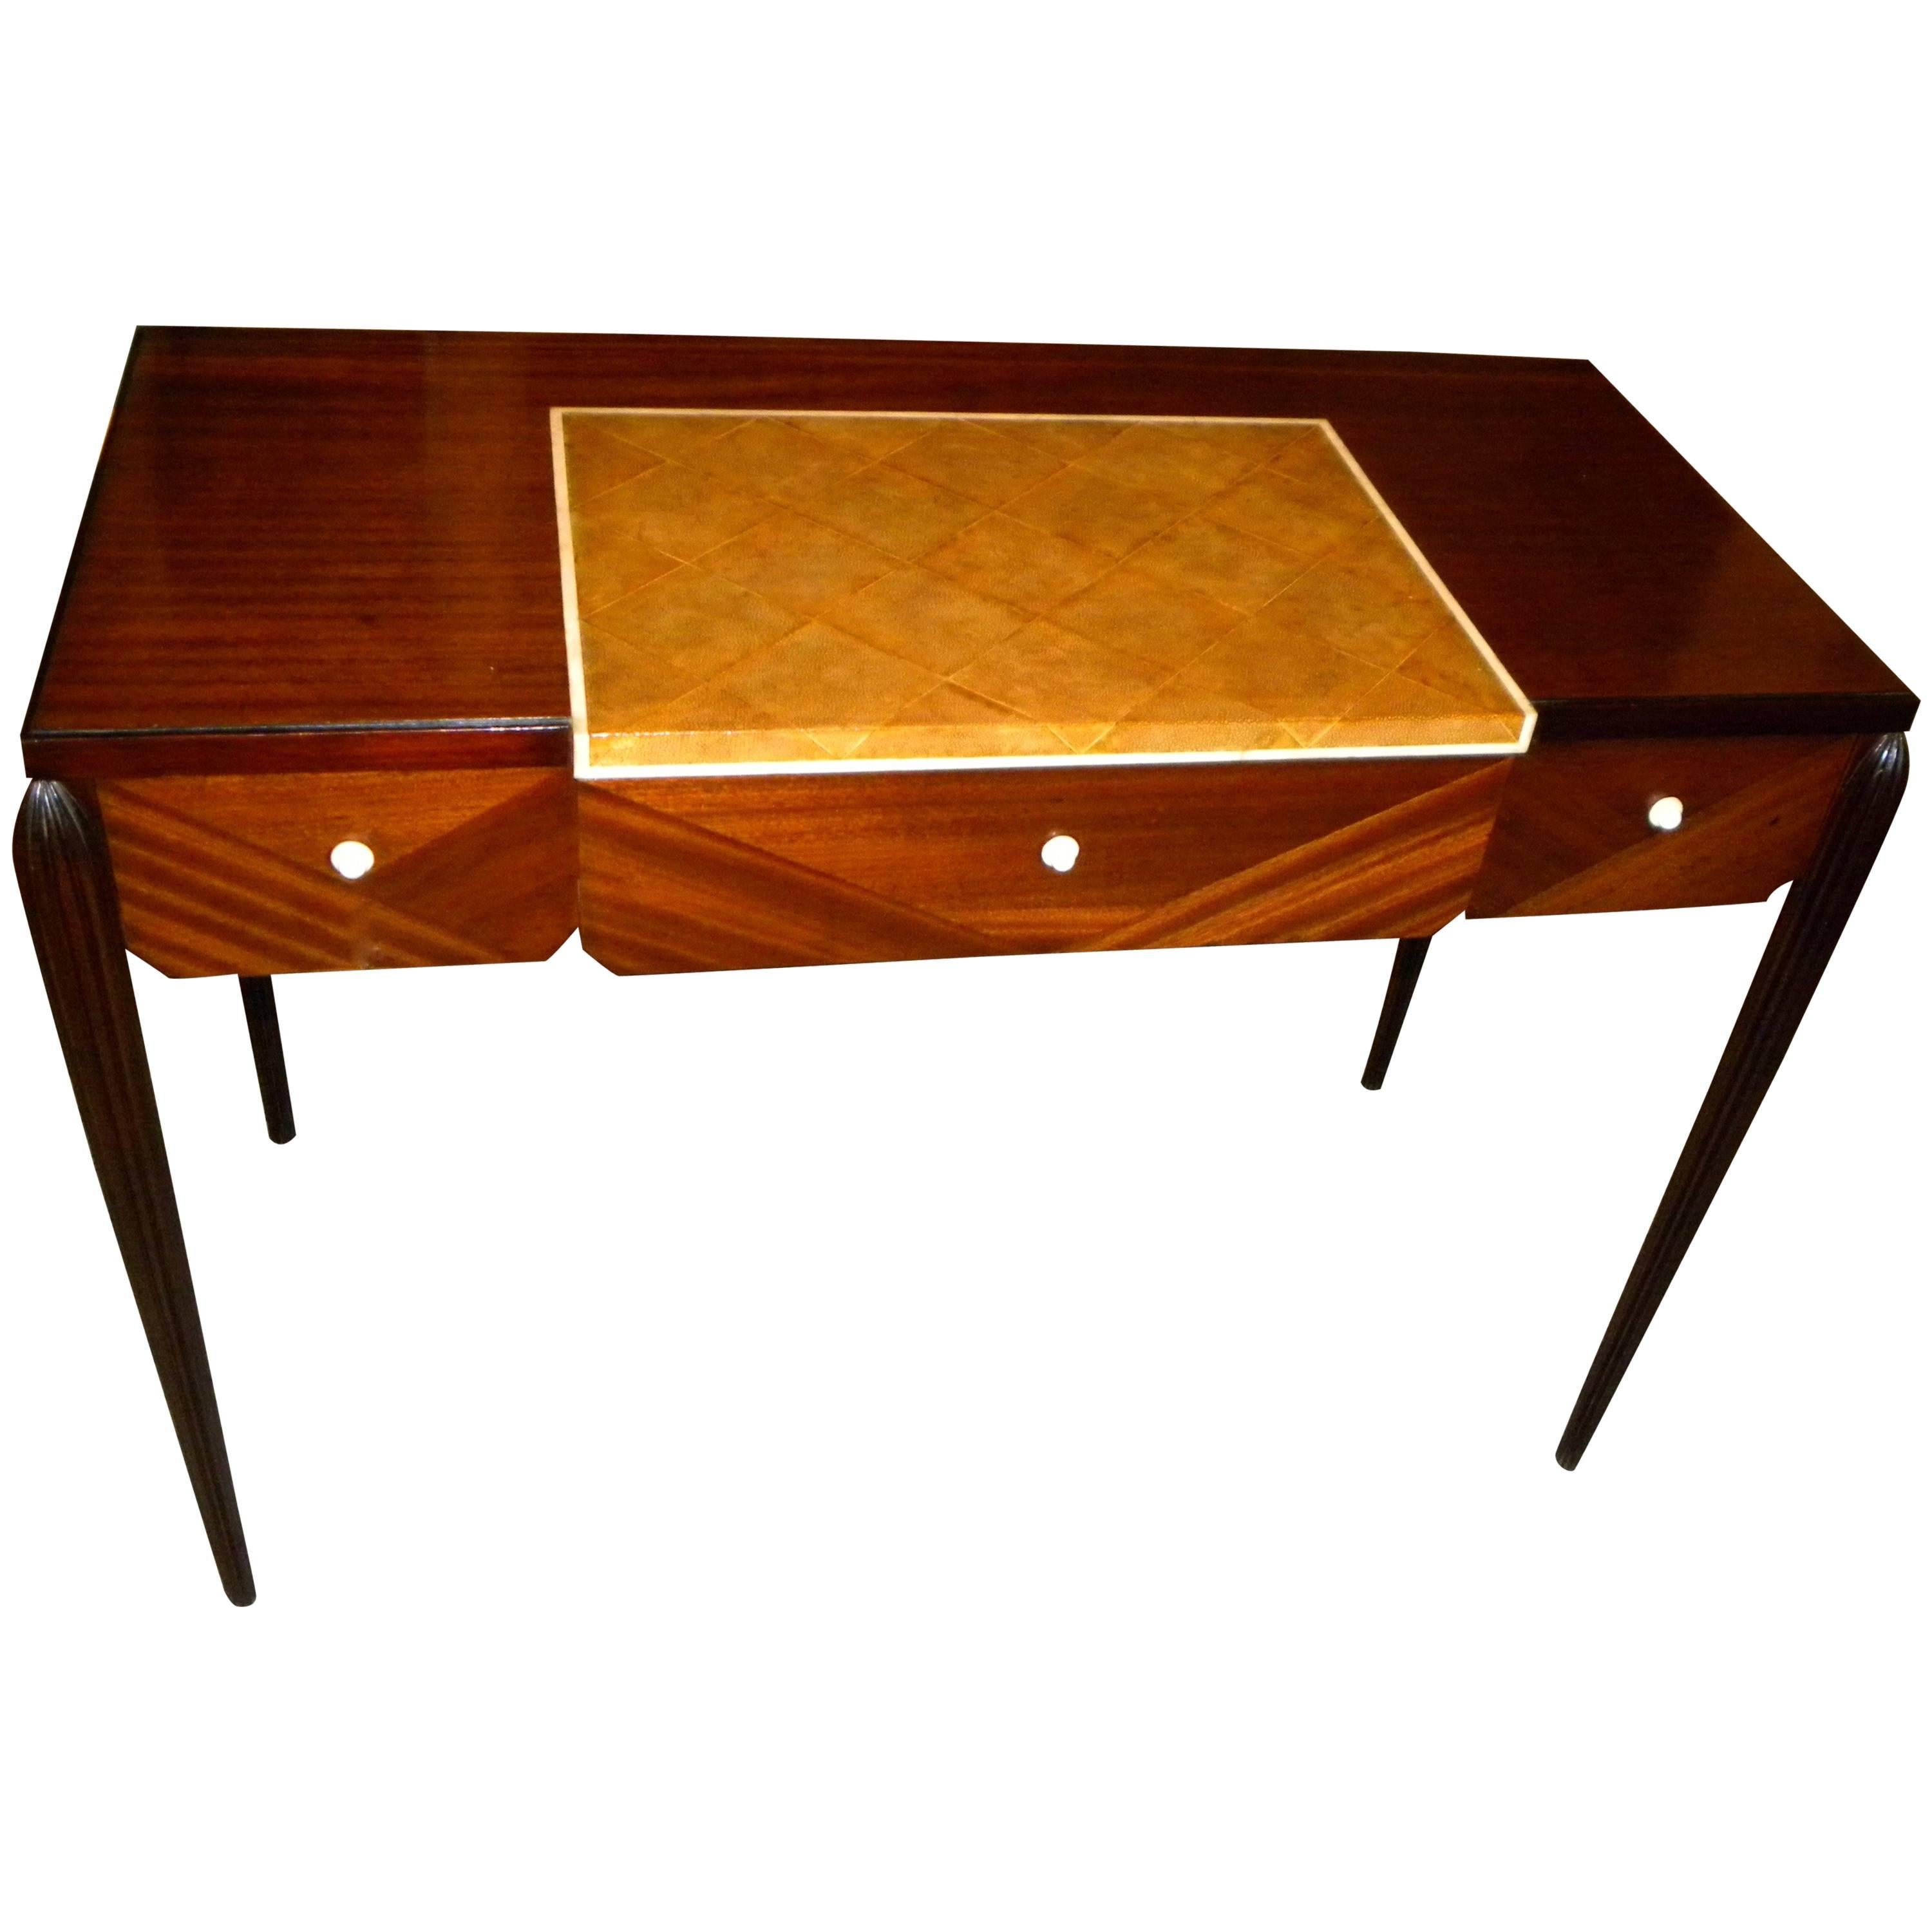 Petite Art Deco Desk, Vanity Ruhlmann Style Mahogany, Shagreen and Bone Inlay